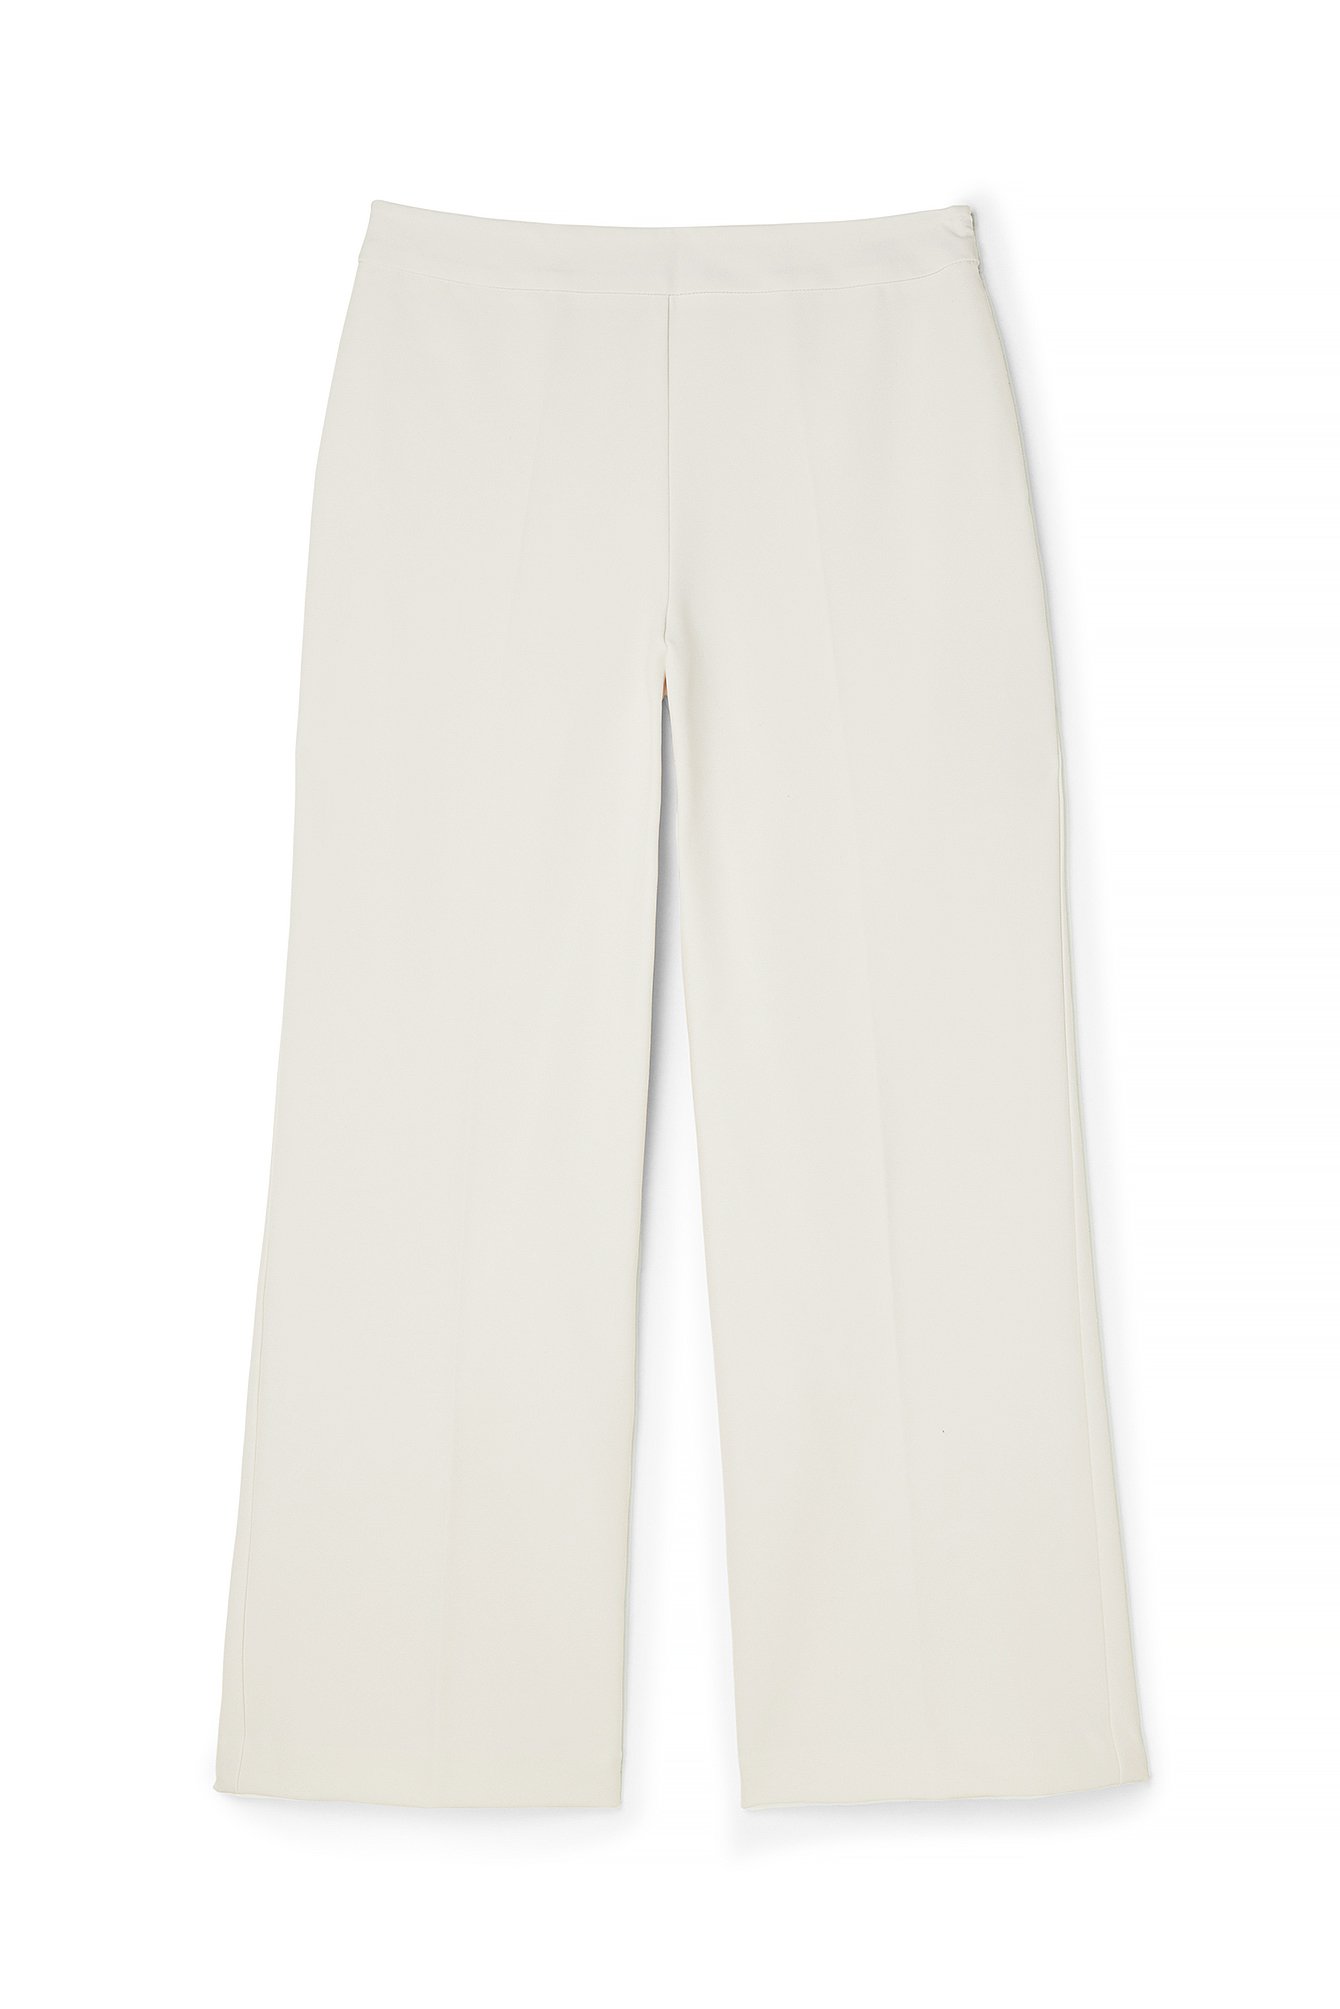 White, Women's Trousers | M&S IE